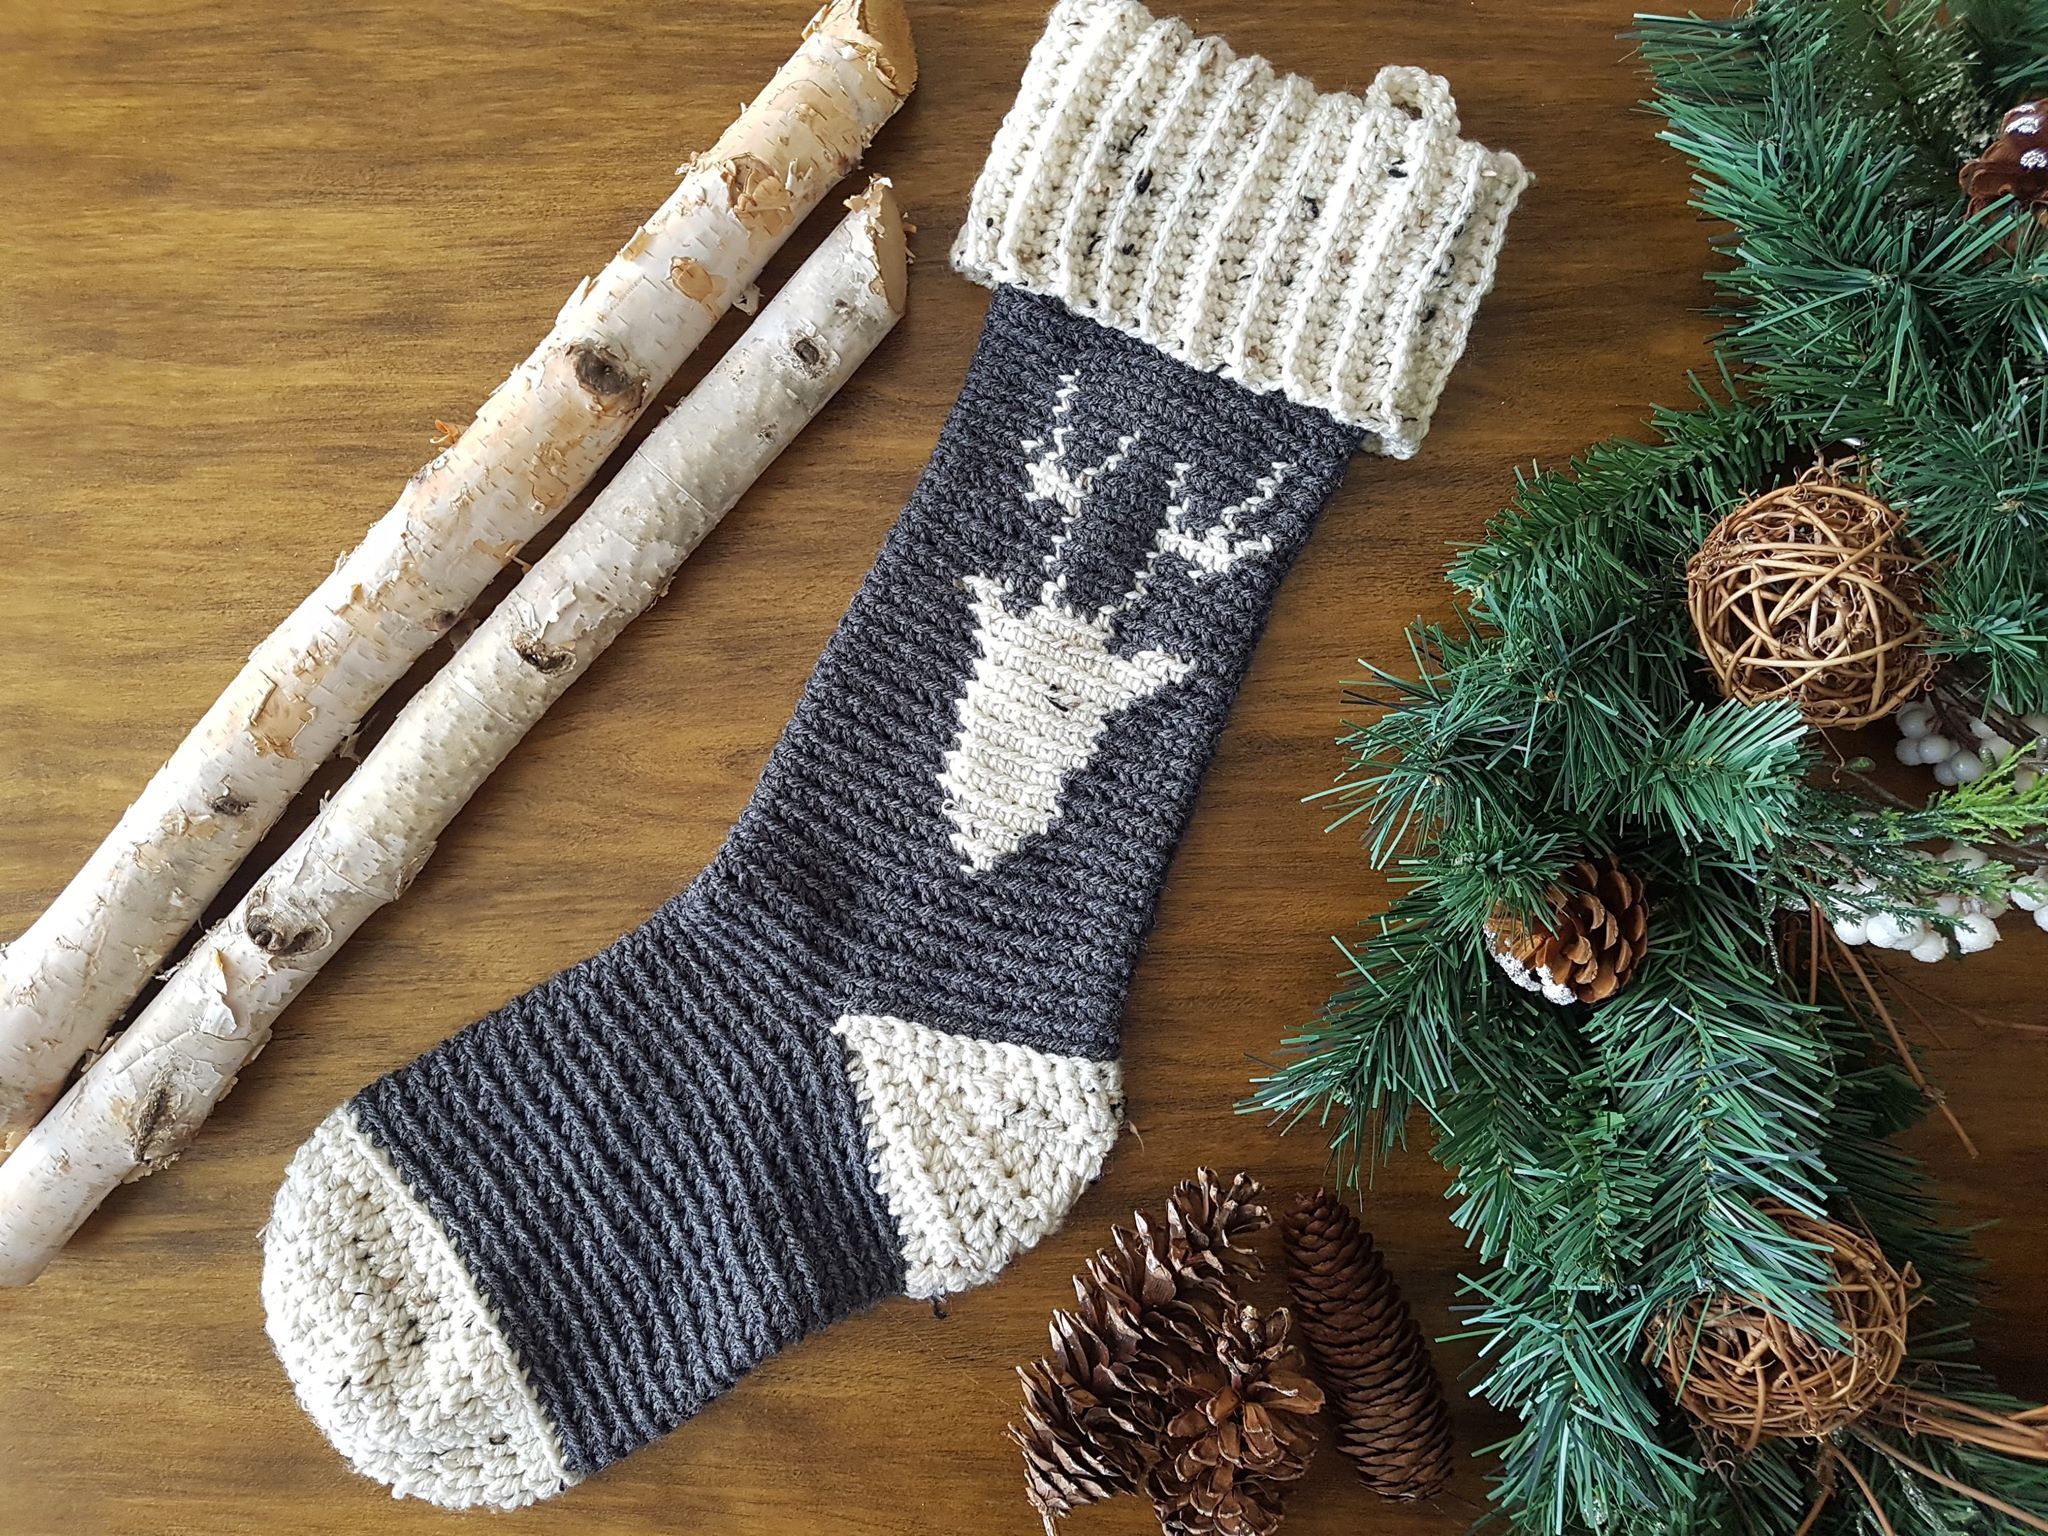 Stocking Holiday Stocking Hand crocheted Christmas Stocking Holiday Decor Hand made Made in USA